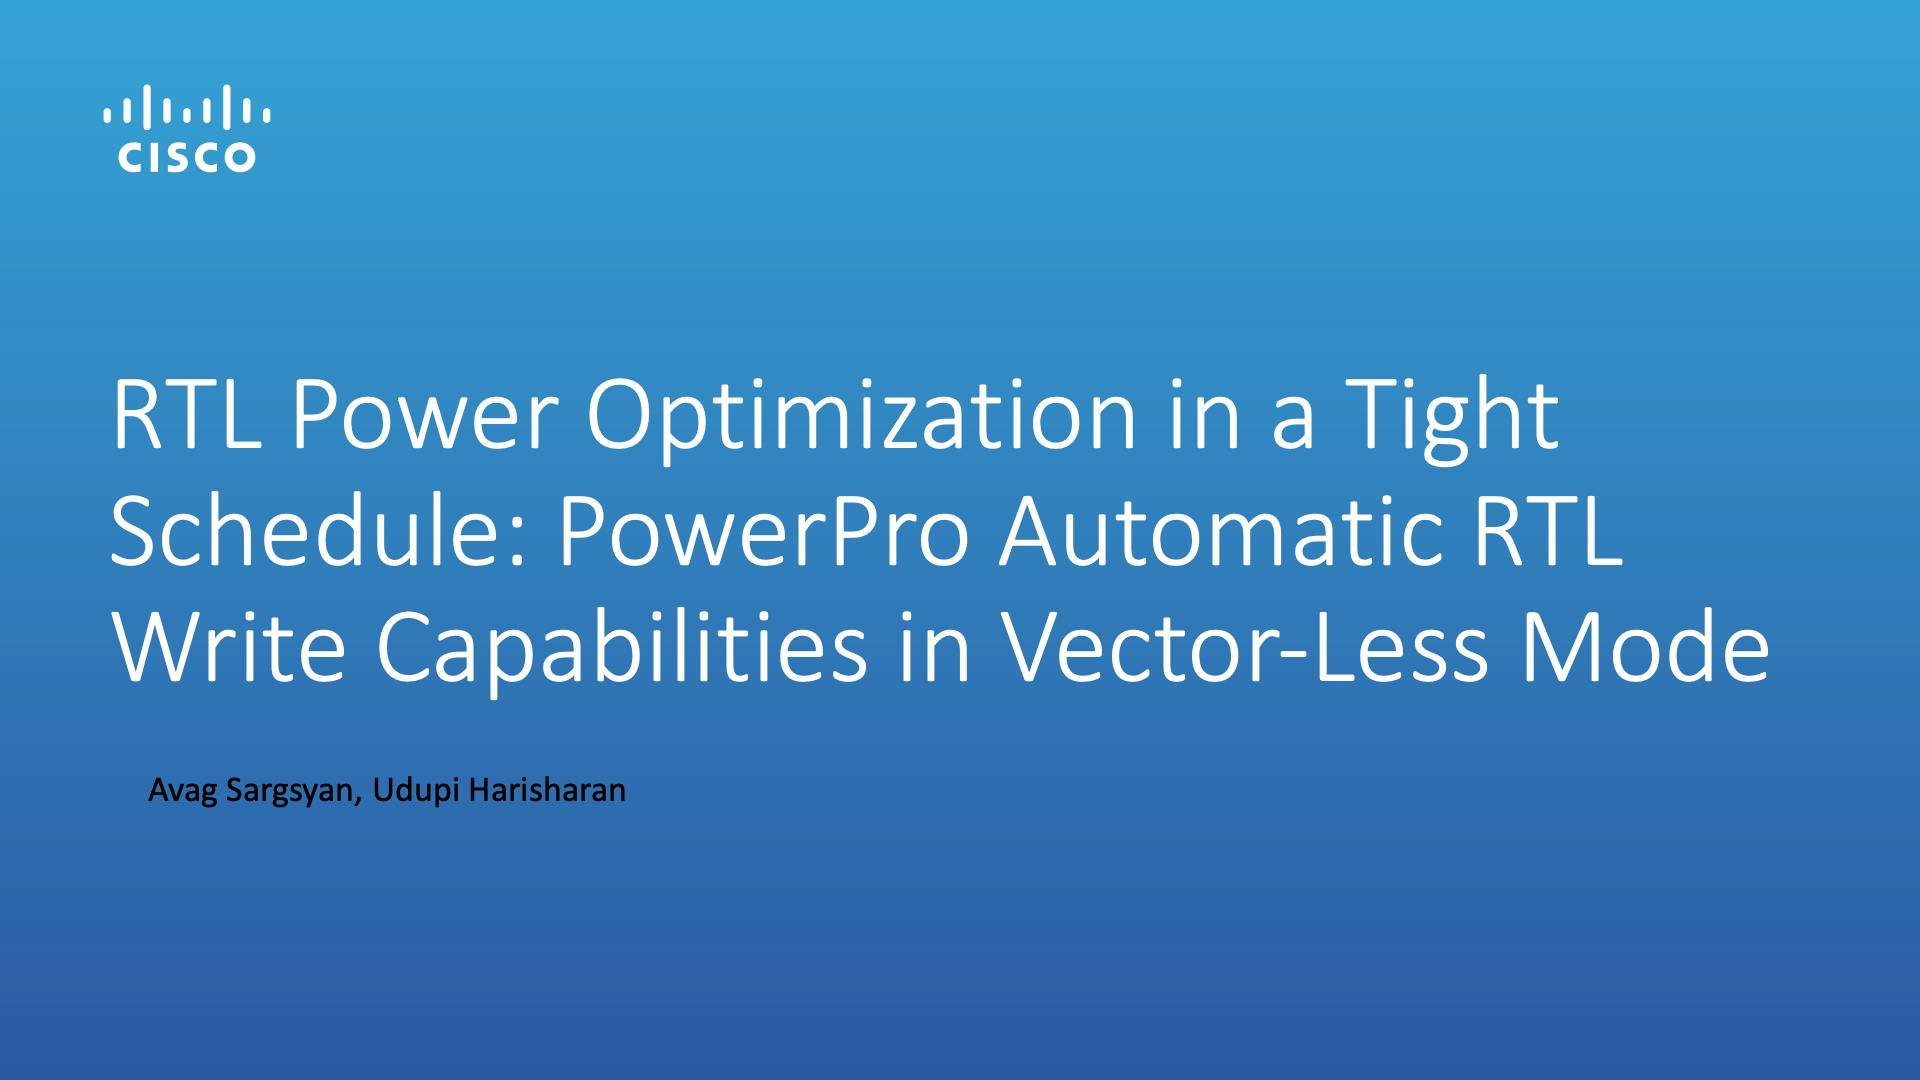 Cisco: RTL Power Optimization - PowerPro in Vector-Less Mode